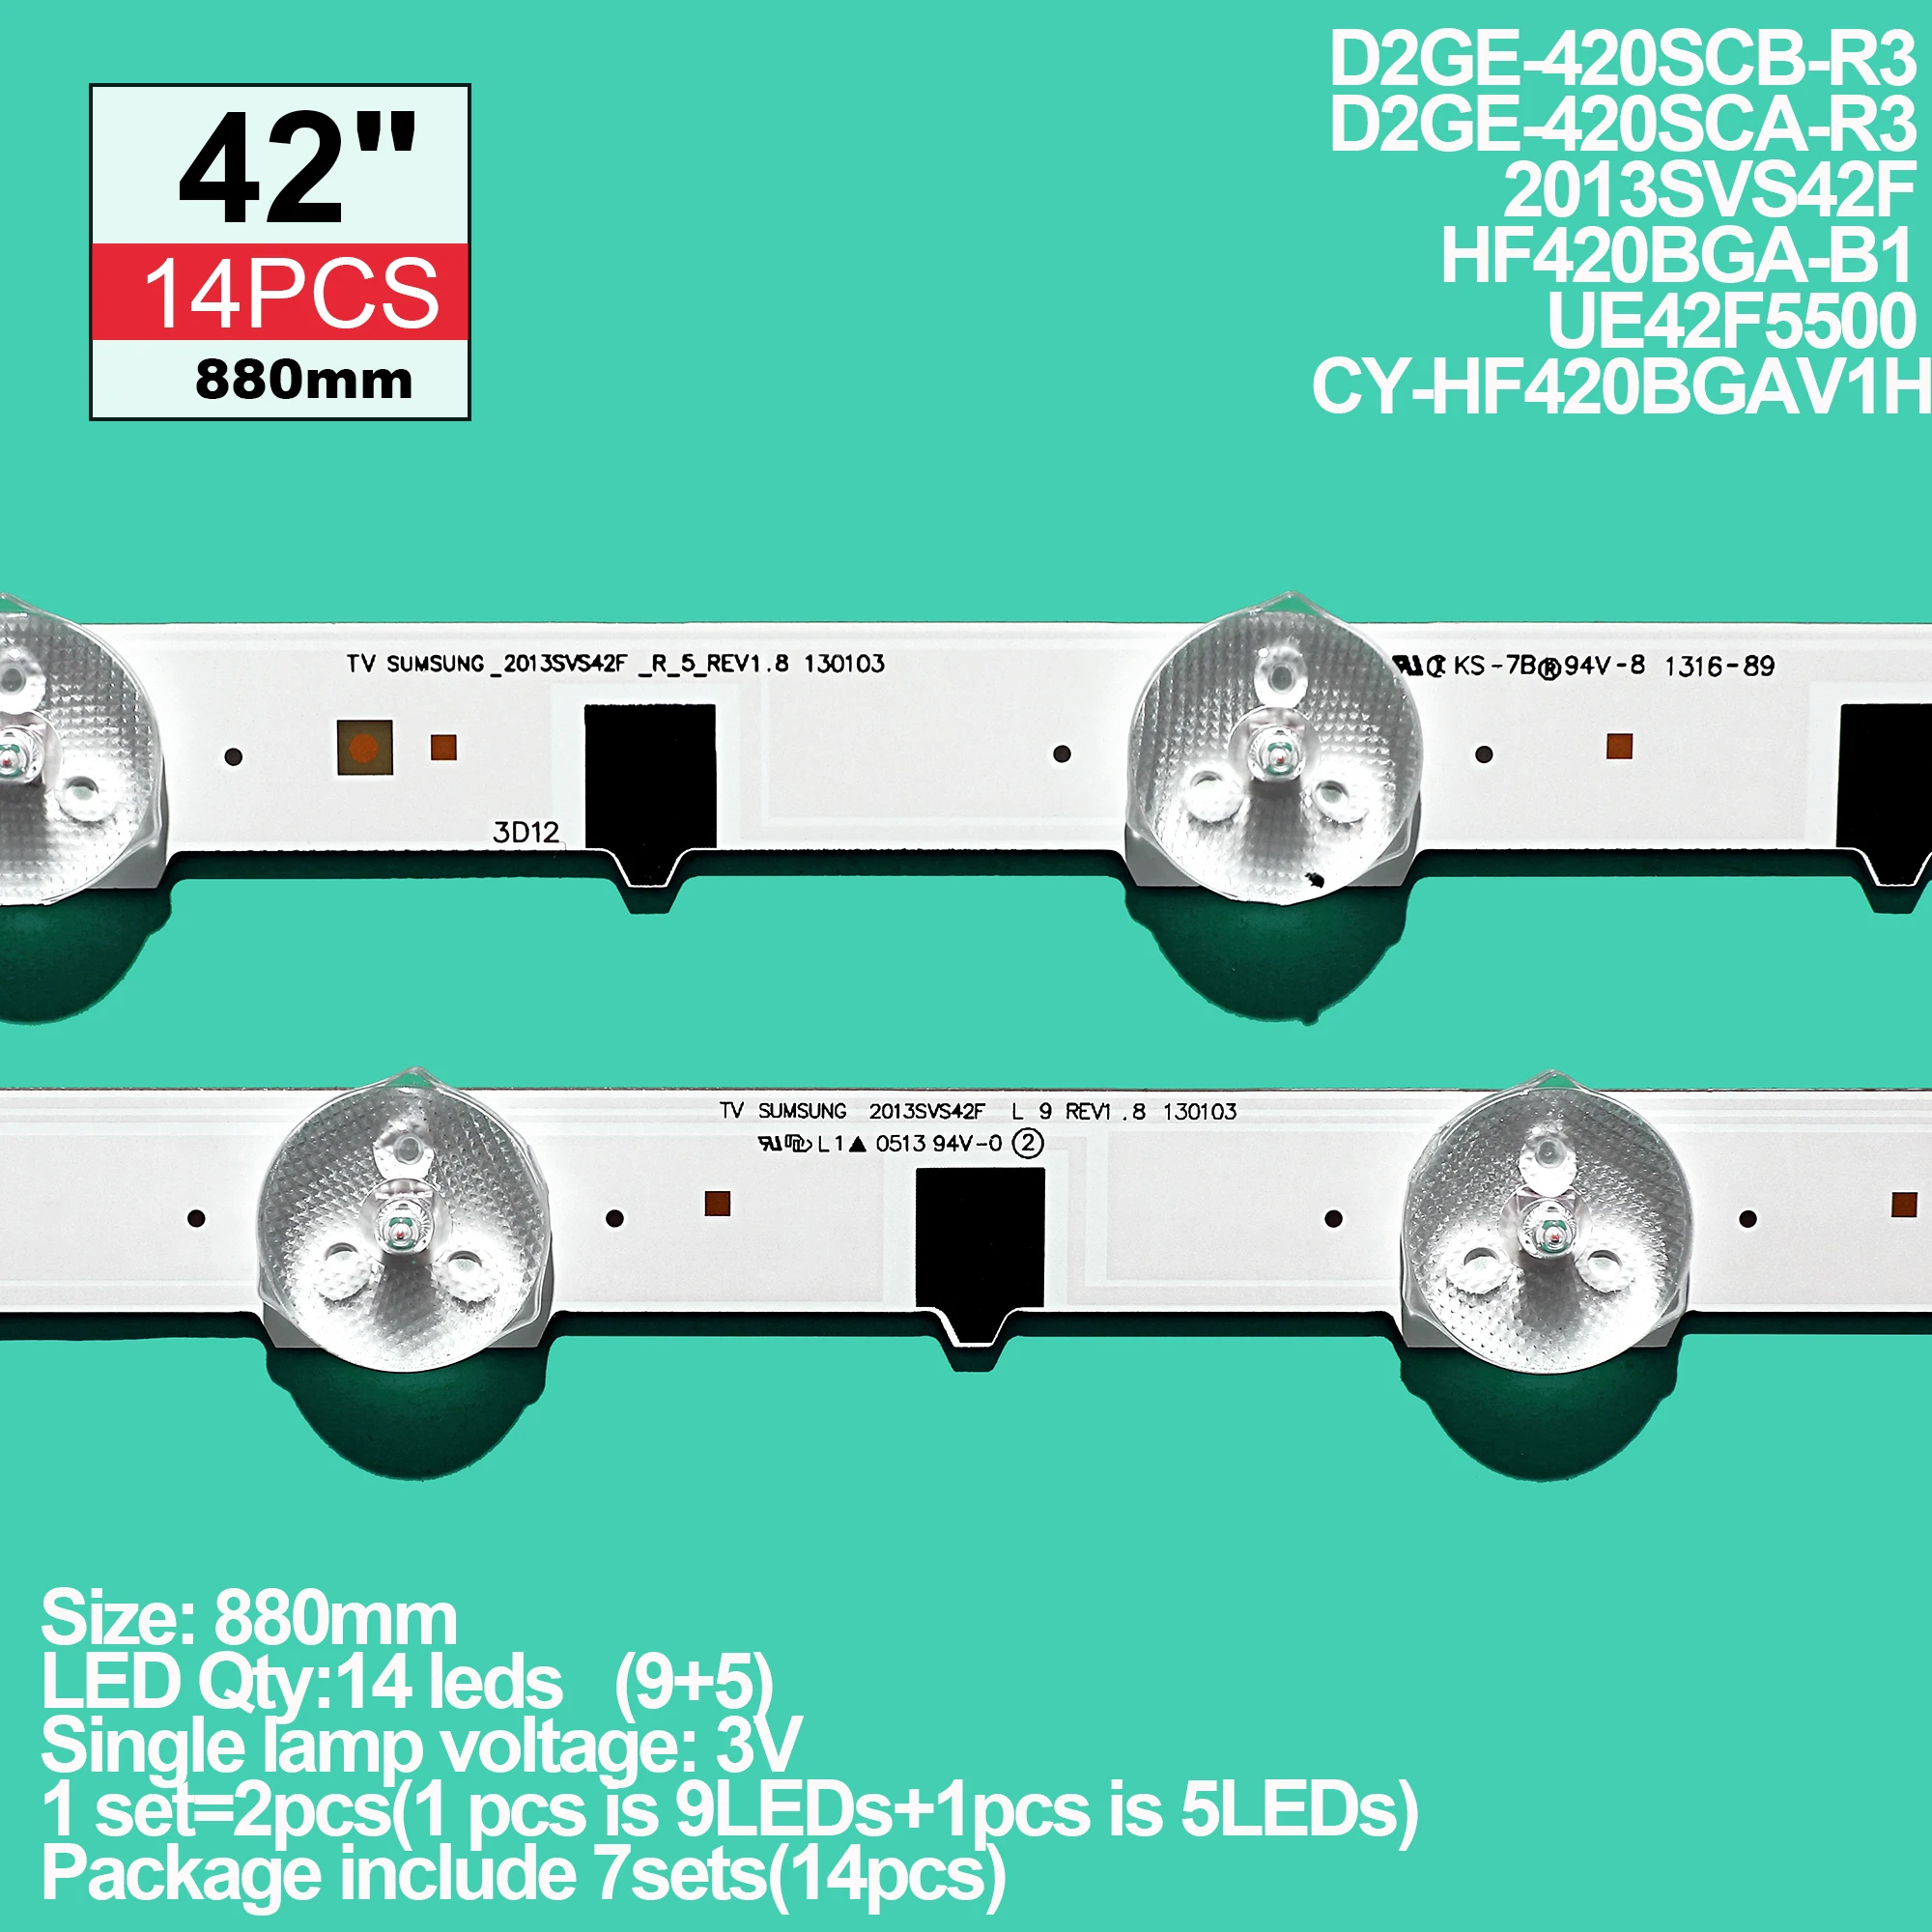 

New LED BackLGht strip 14 lamp For Sam_Sung 42" TV D2GE-420SCB-R3 D2GE-420SCA-R3 2013SVS42F HF420BGA-B1 UE42F5500 CY-HF420BGAV1H